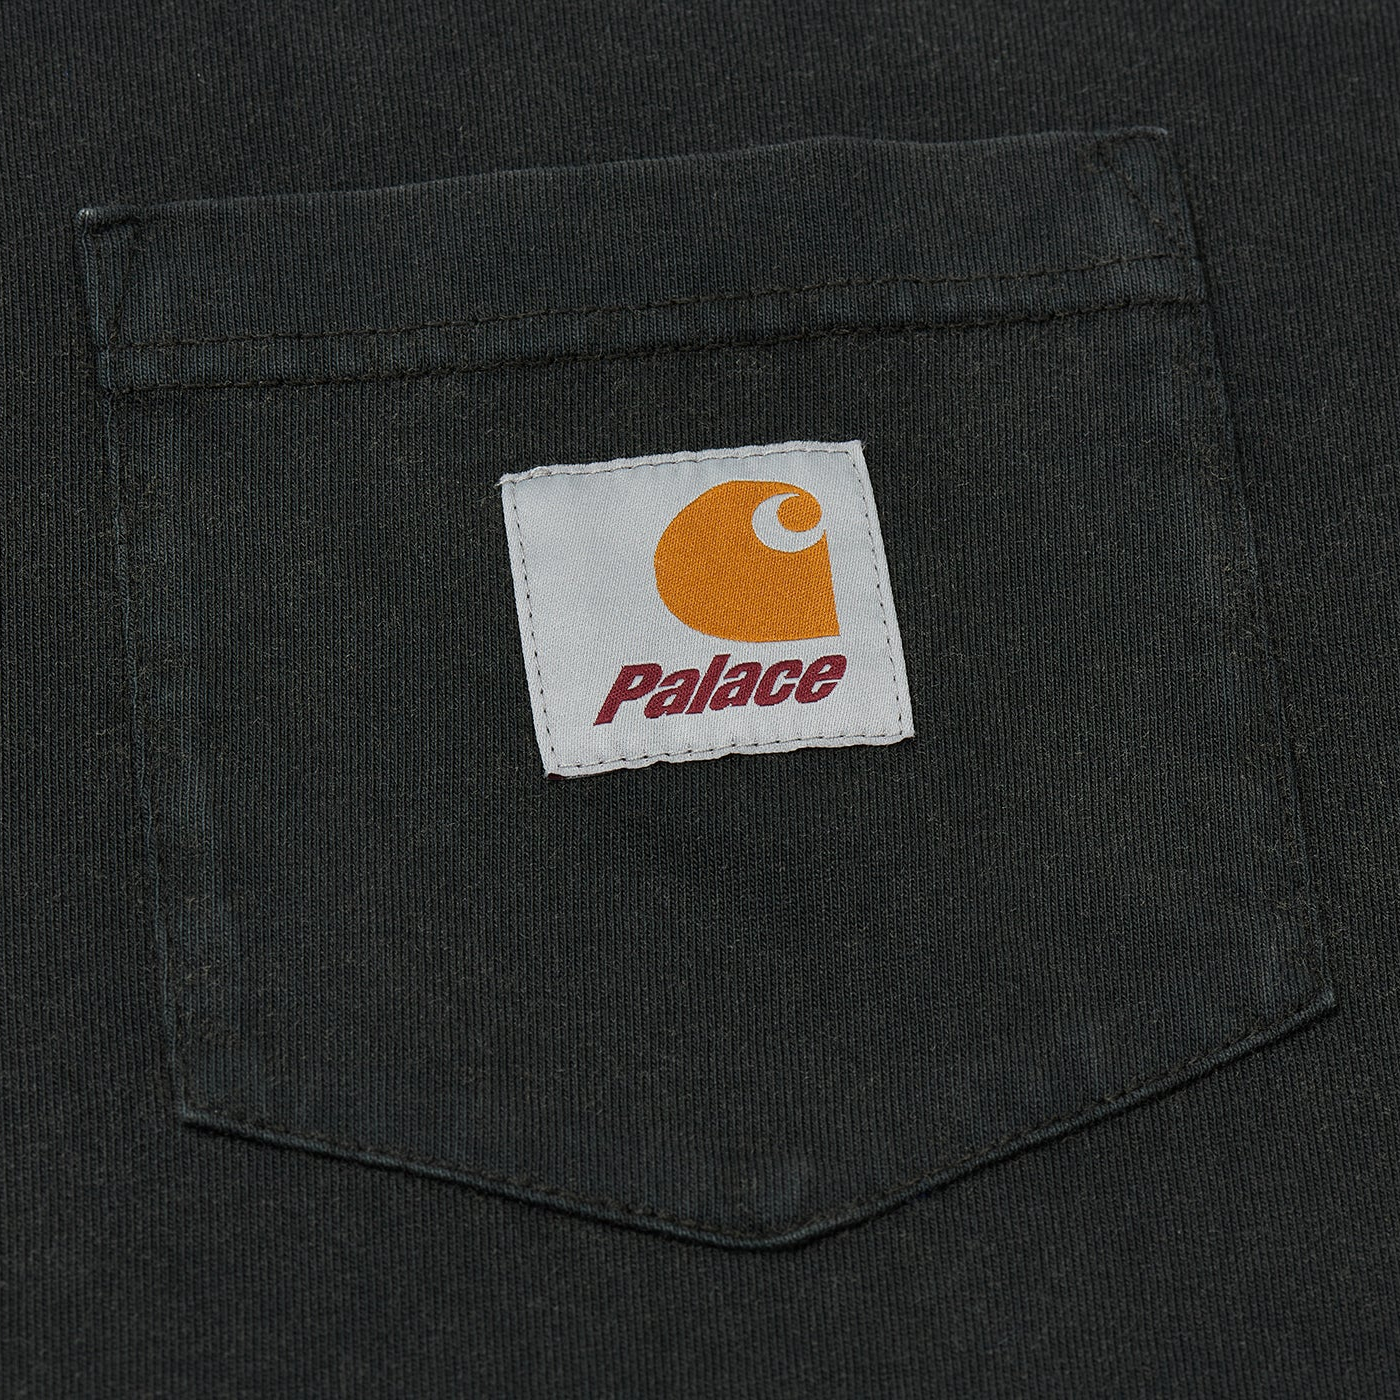 Palace Carhartt Wip S/s Pocket T-Shirt Black - Palace Carhartt WIP - Palace  Community